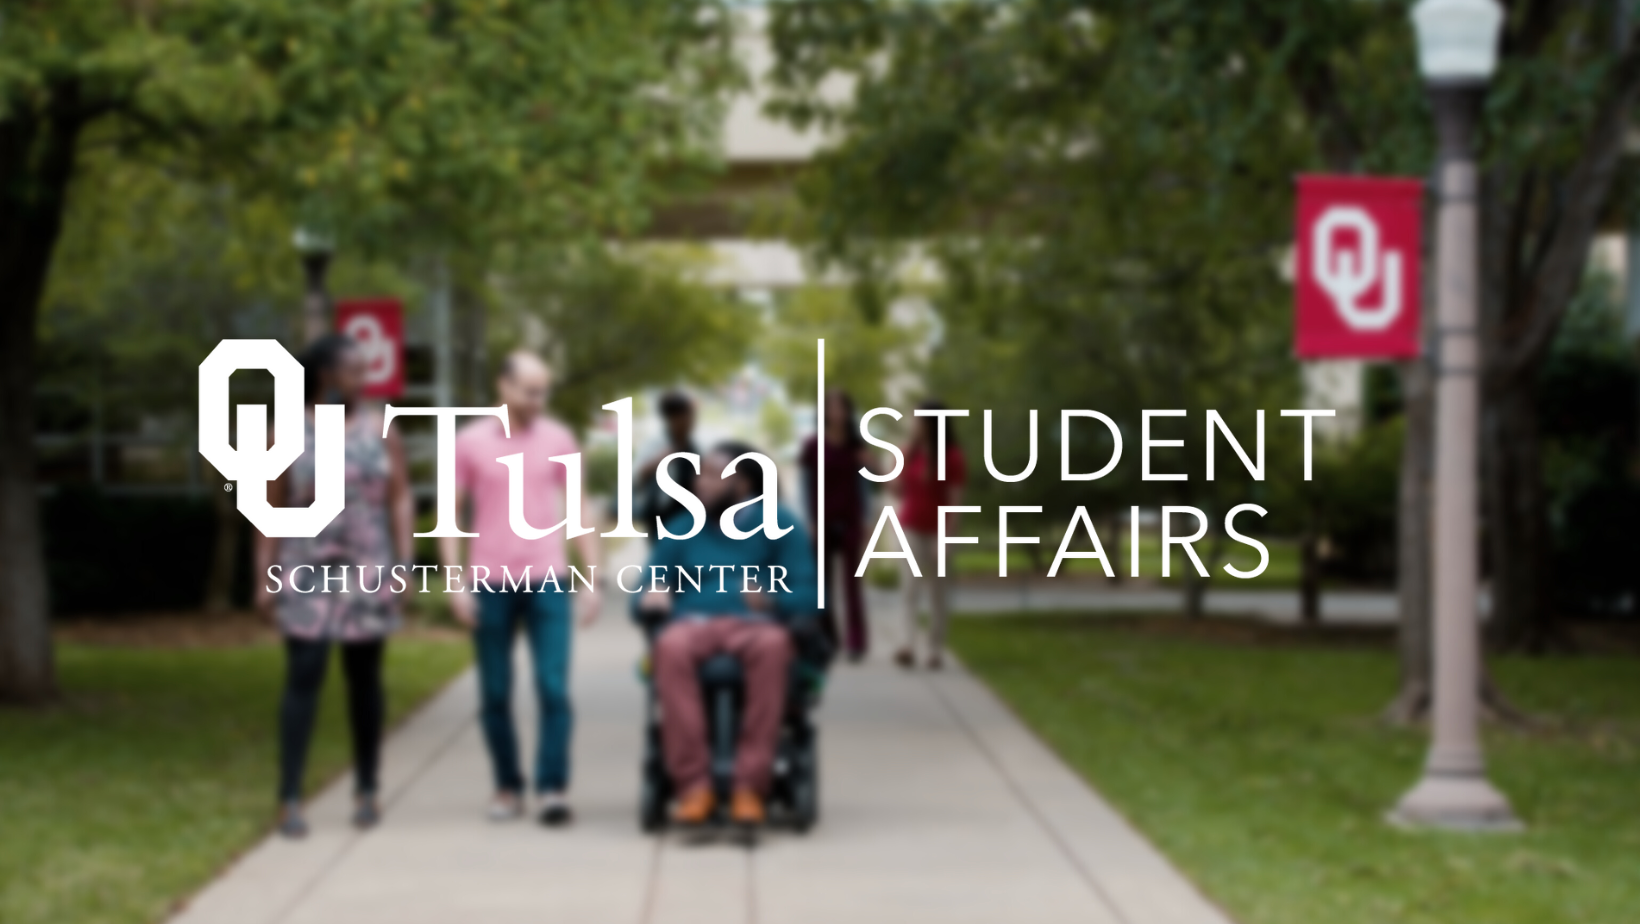 OU-Tulsa Schusterman Center Student Affairs